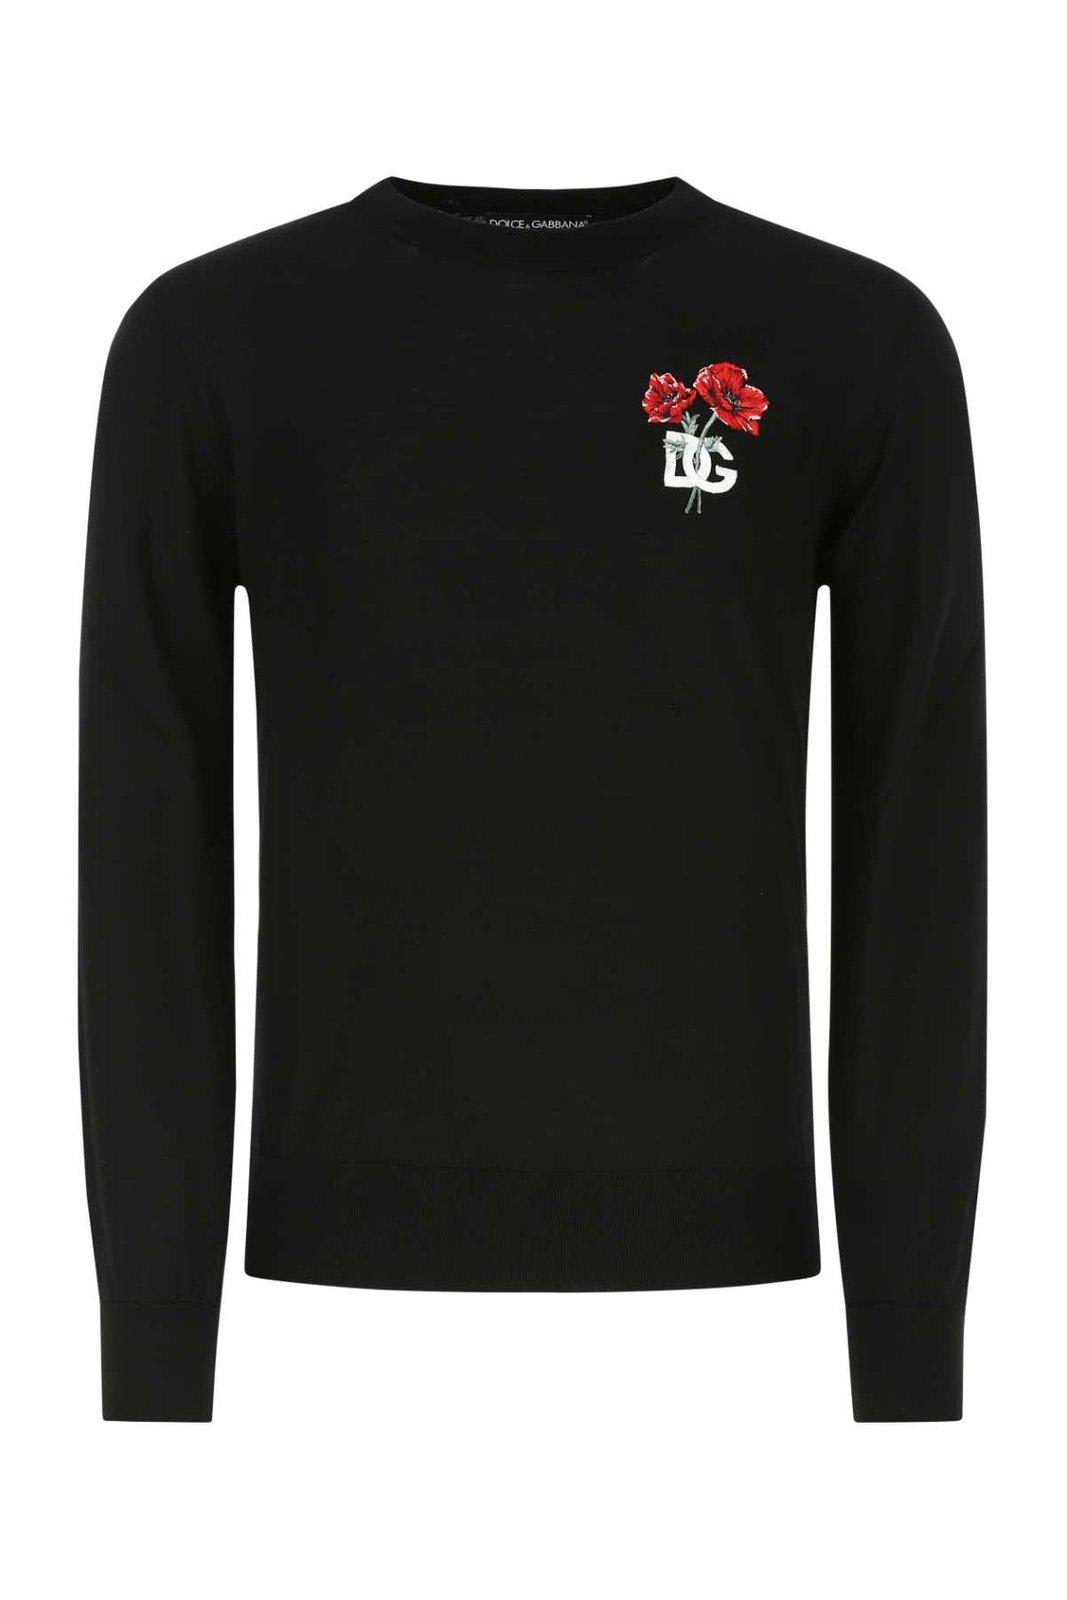 Dolce & Gabbana Flower-embroidered Crewneck Sweater